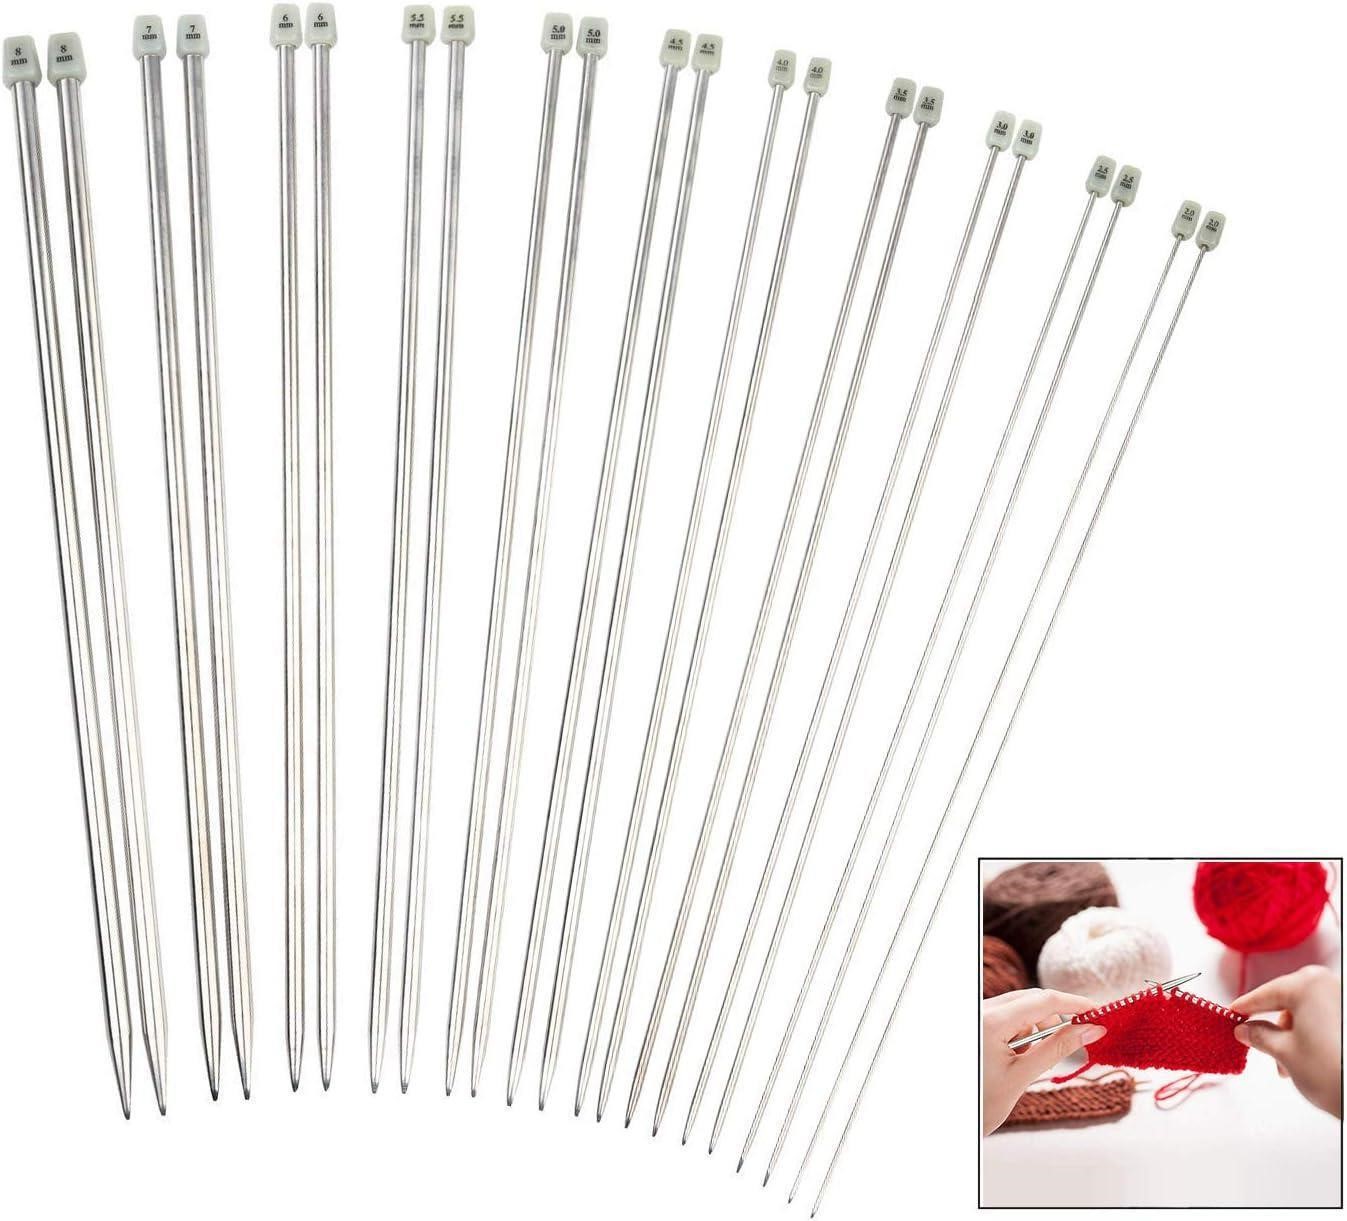 NEW-Xrten 11-Set Steel Knitting Needles